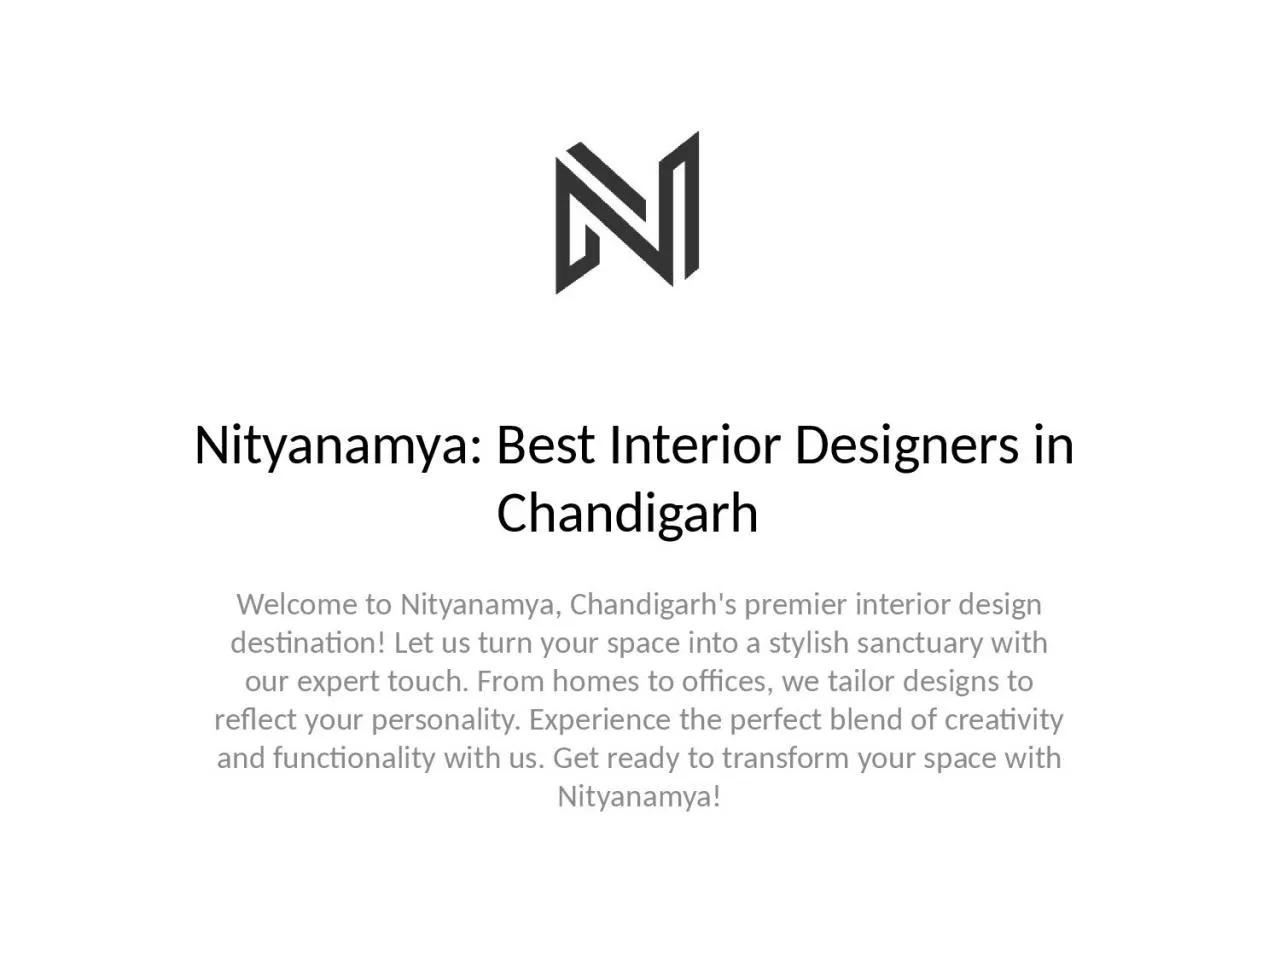 Best Interior Designers in Chandigarh | Nityanamya